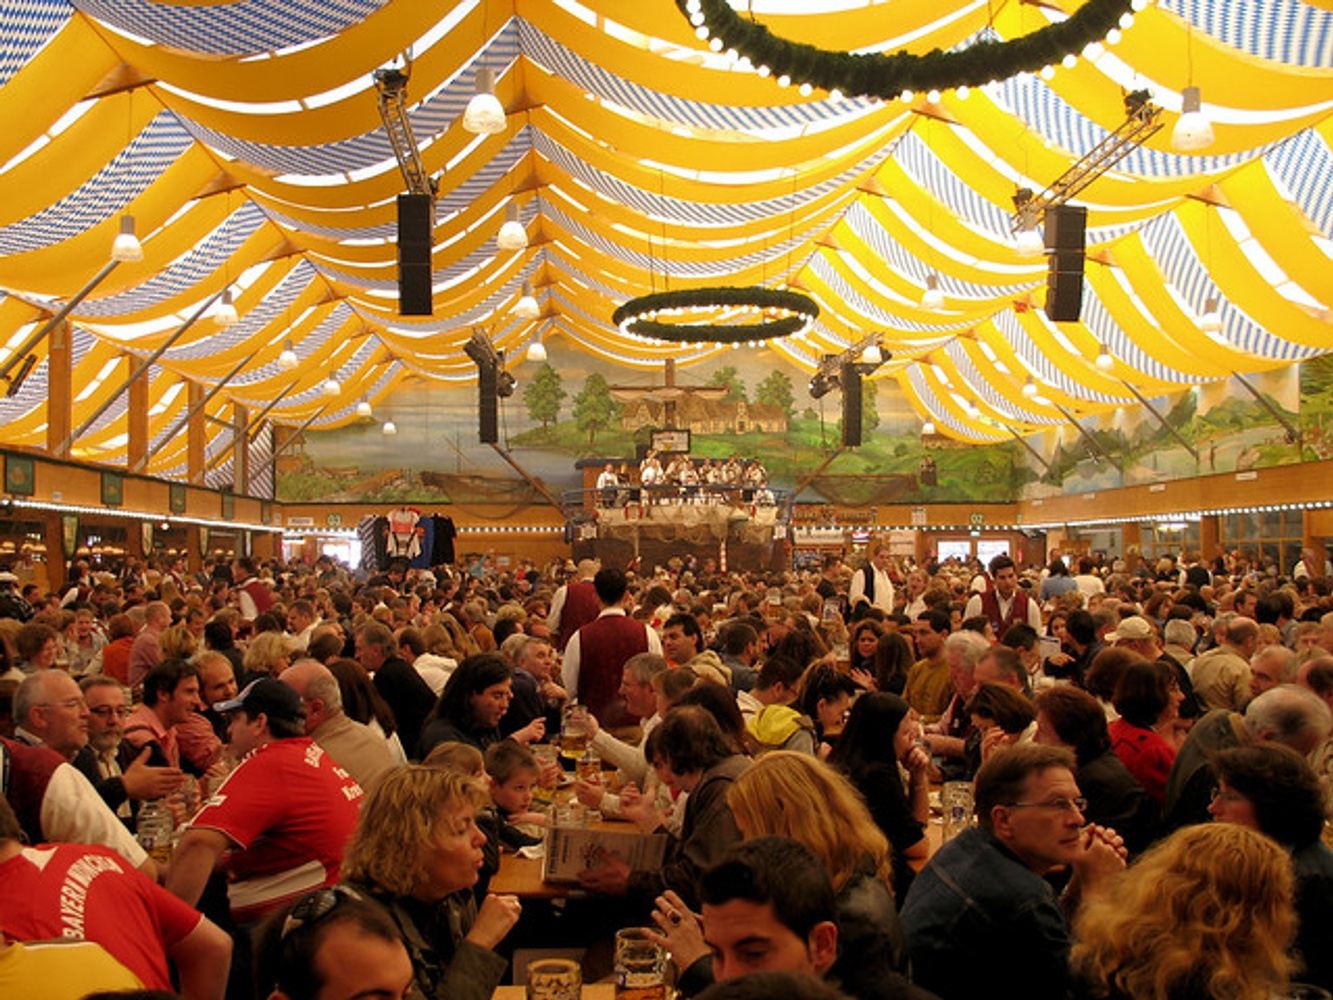 Munich's Oktoberfest!